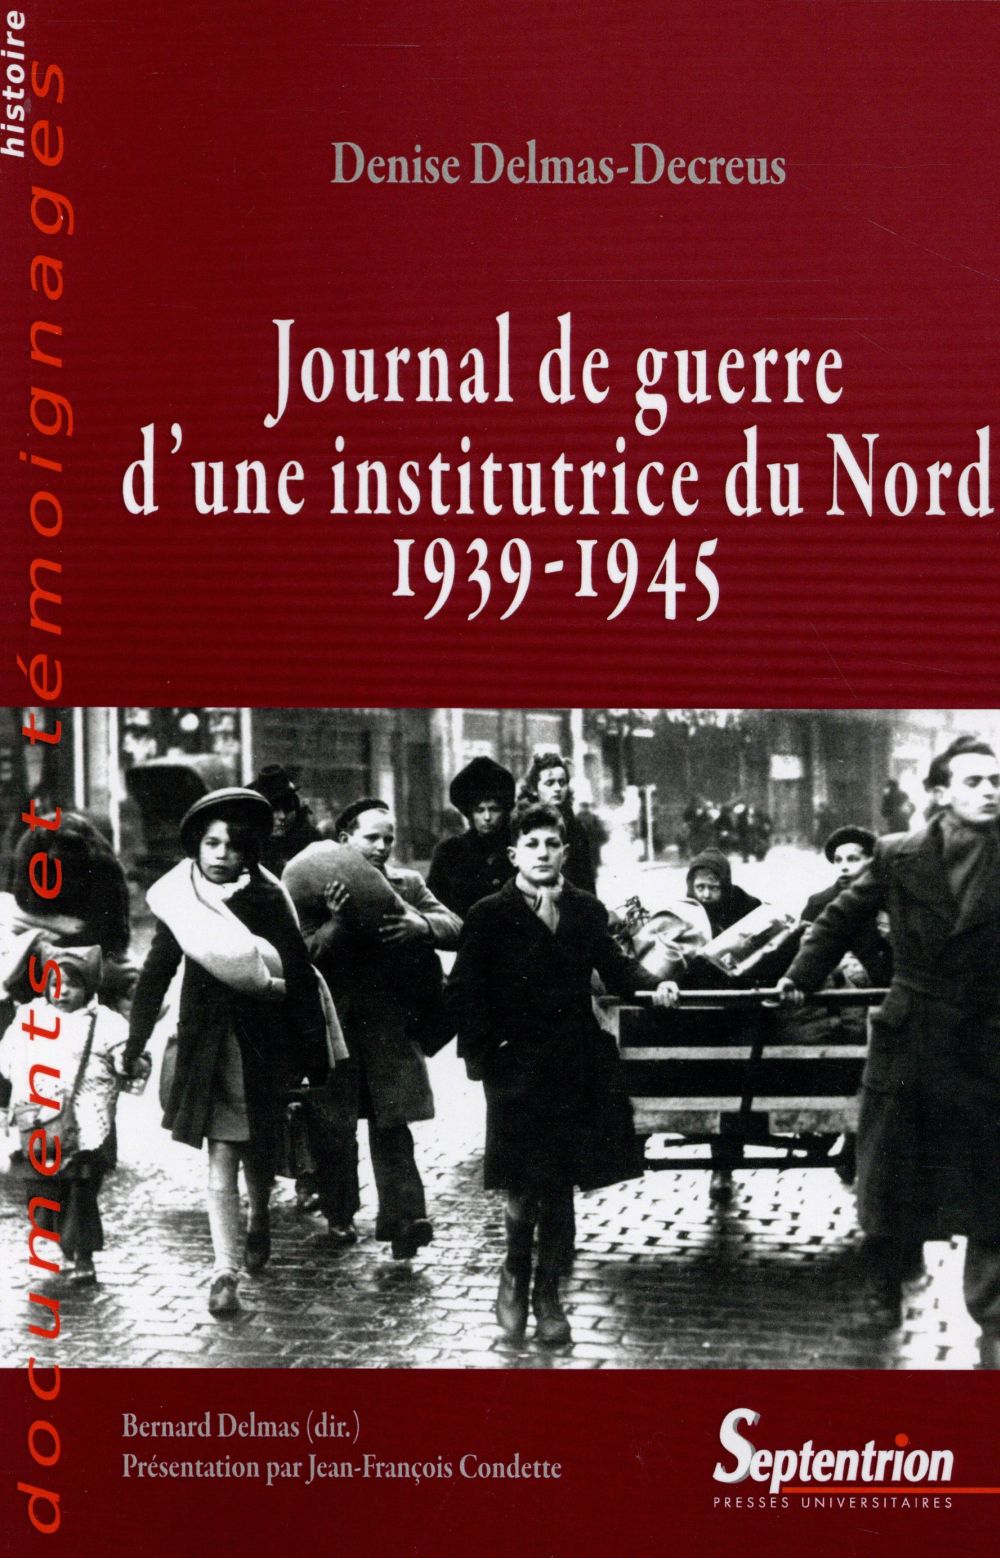 JOURNAL DE GUERRE D'UNE INSTITUTRICE DU NORD, 1939-1945 A DUNKERQUE, ARRAS, BAILLEUL, HAZEBROUCK